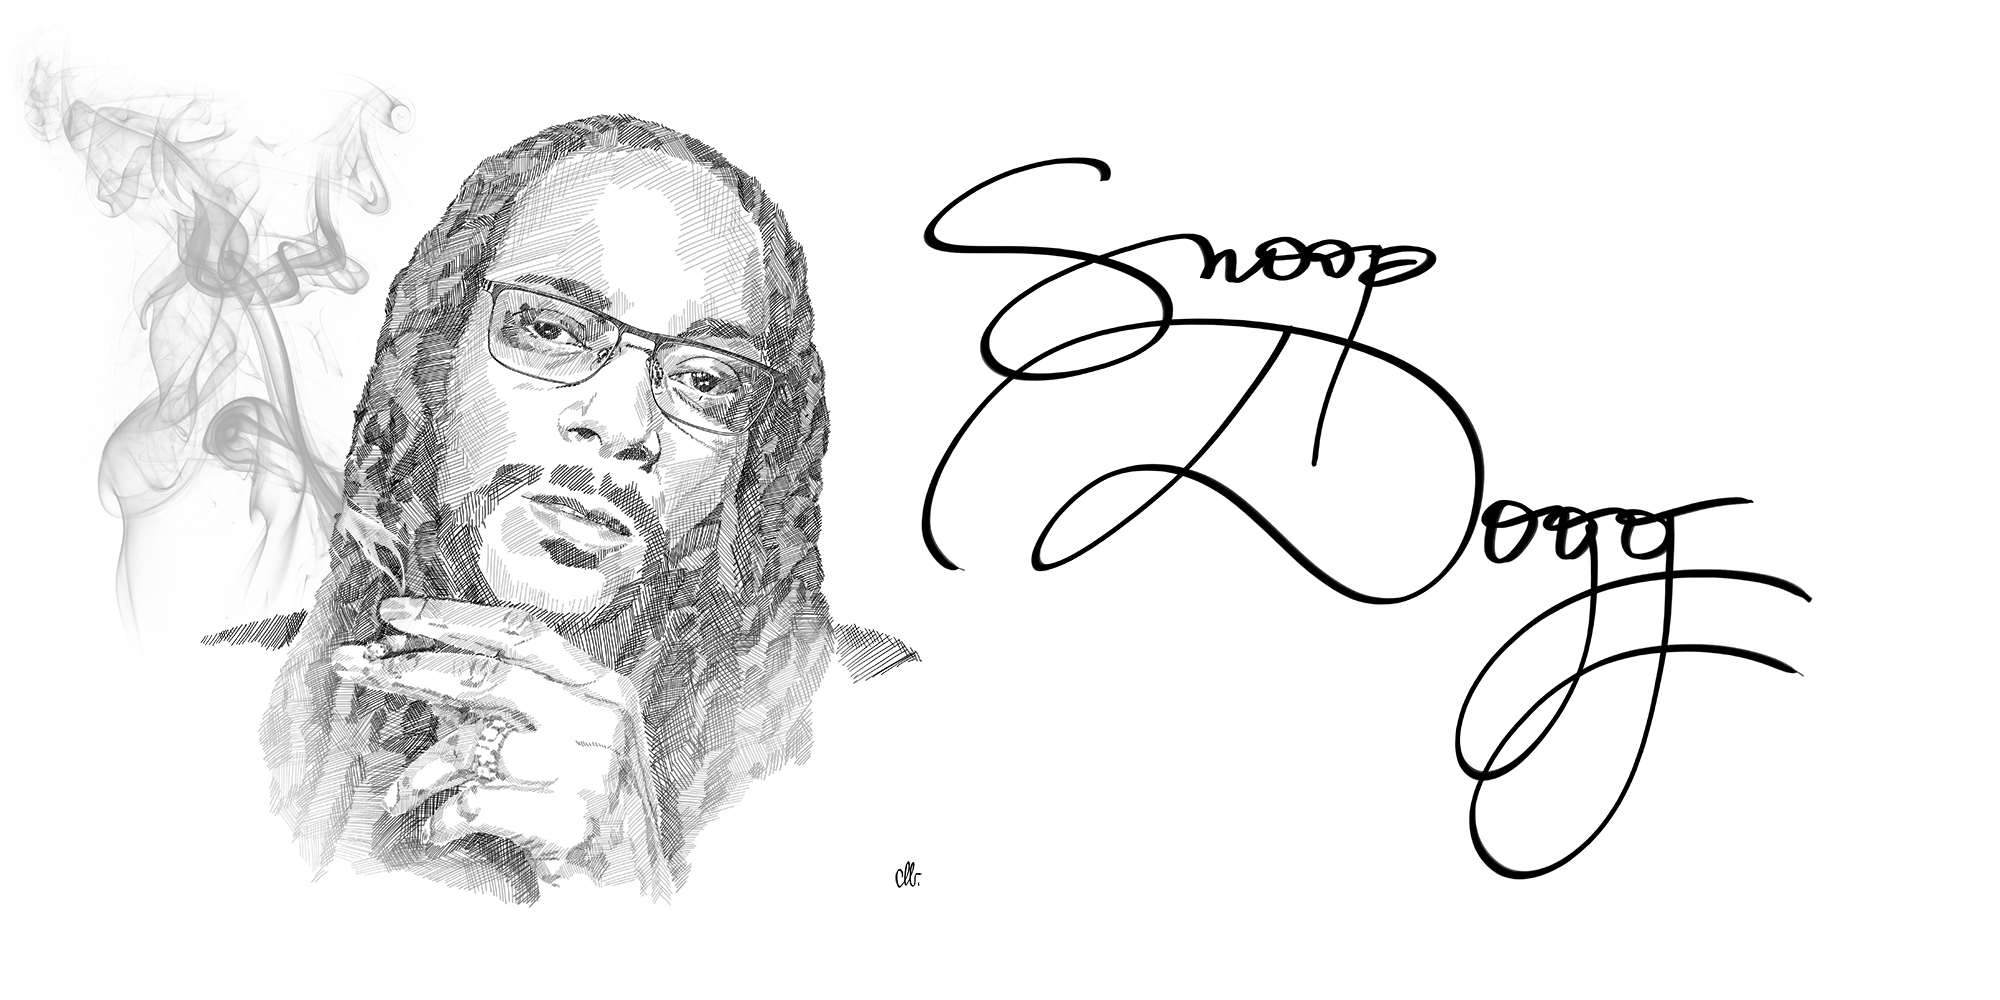 Snoop Dogg / Holy(me)